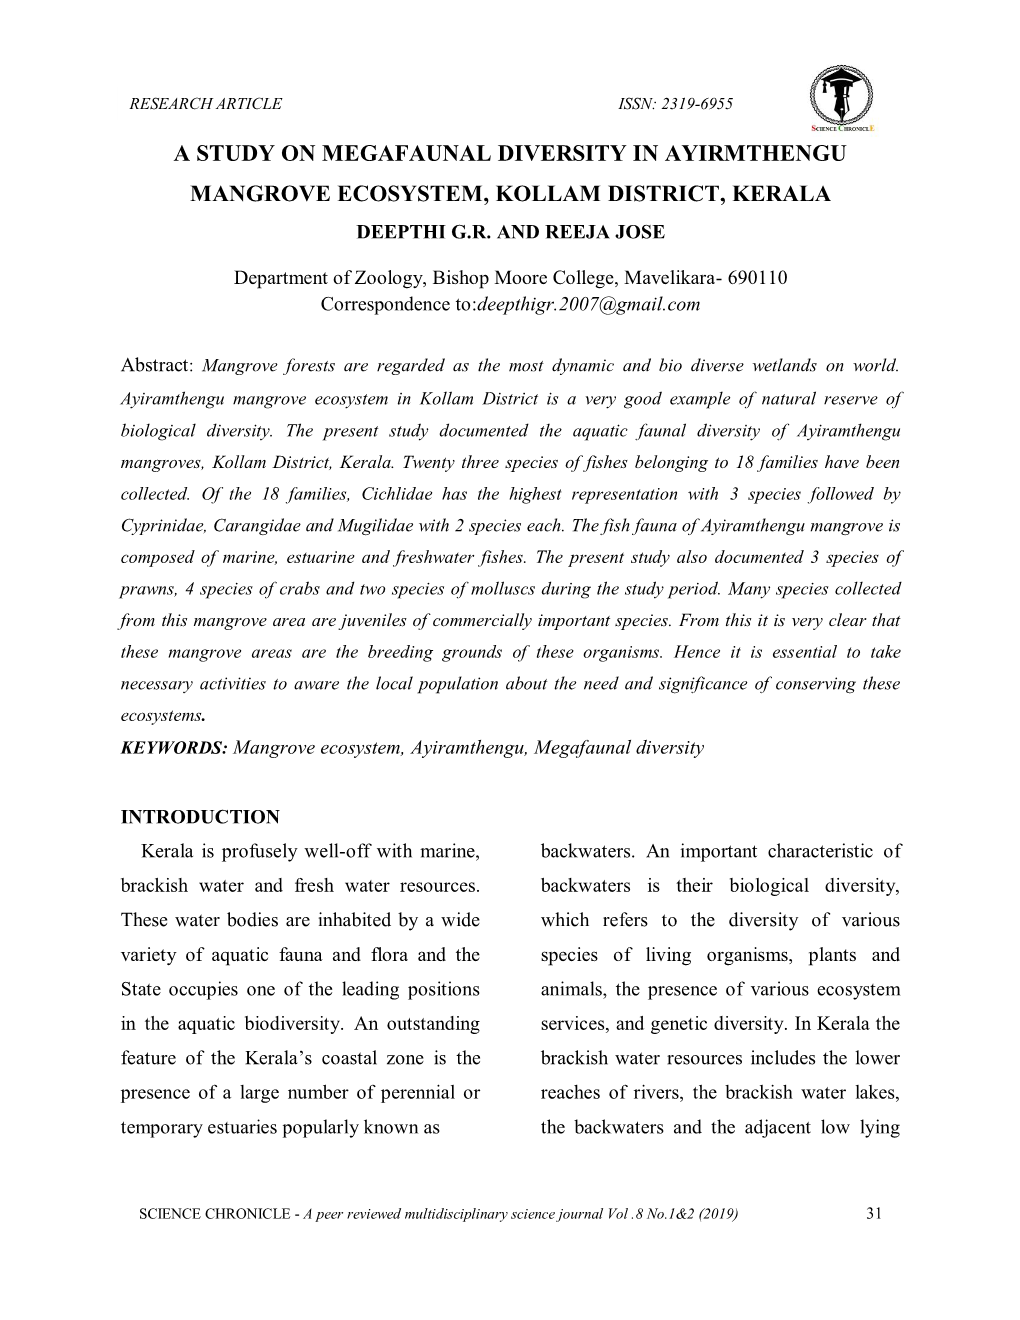 A Study on Megafaunal Diversity in Ayirmthengu Mangrove Ecosystem, Kollam District, Kerala Deepthi G.R